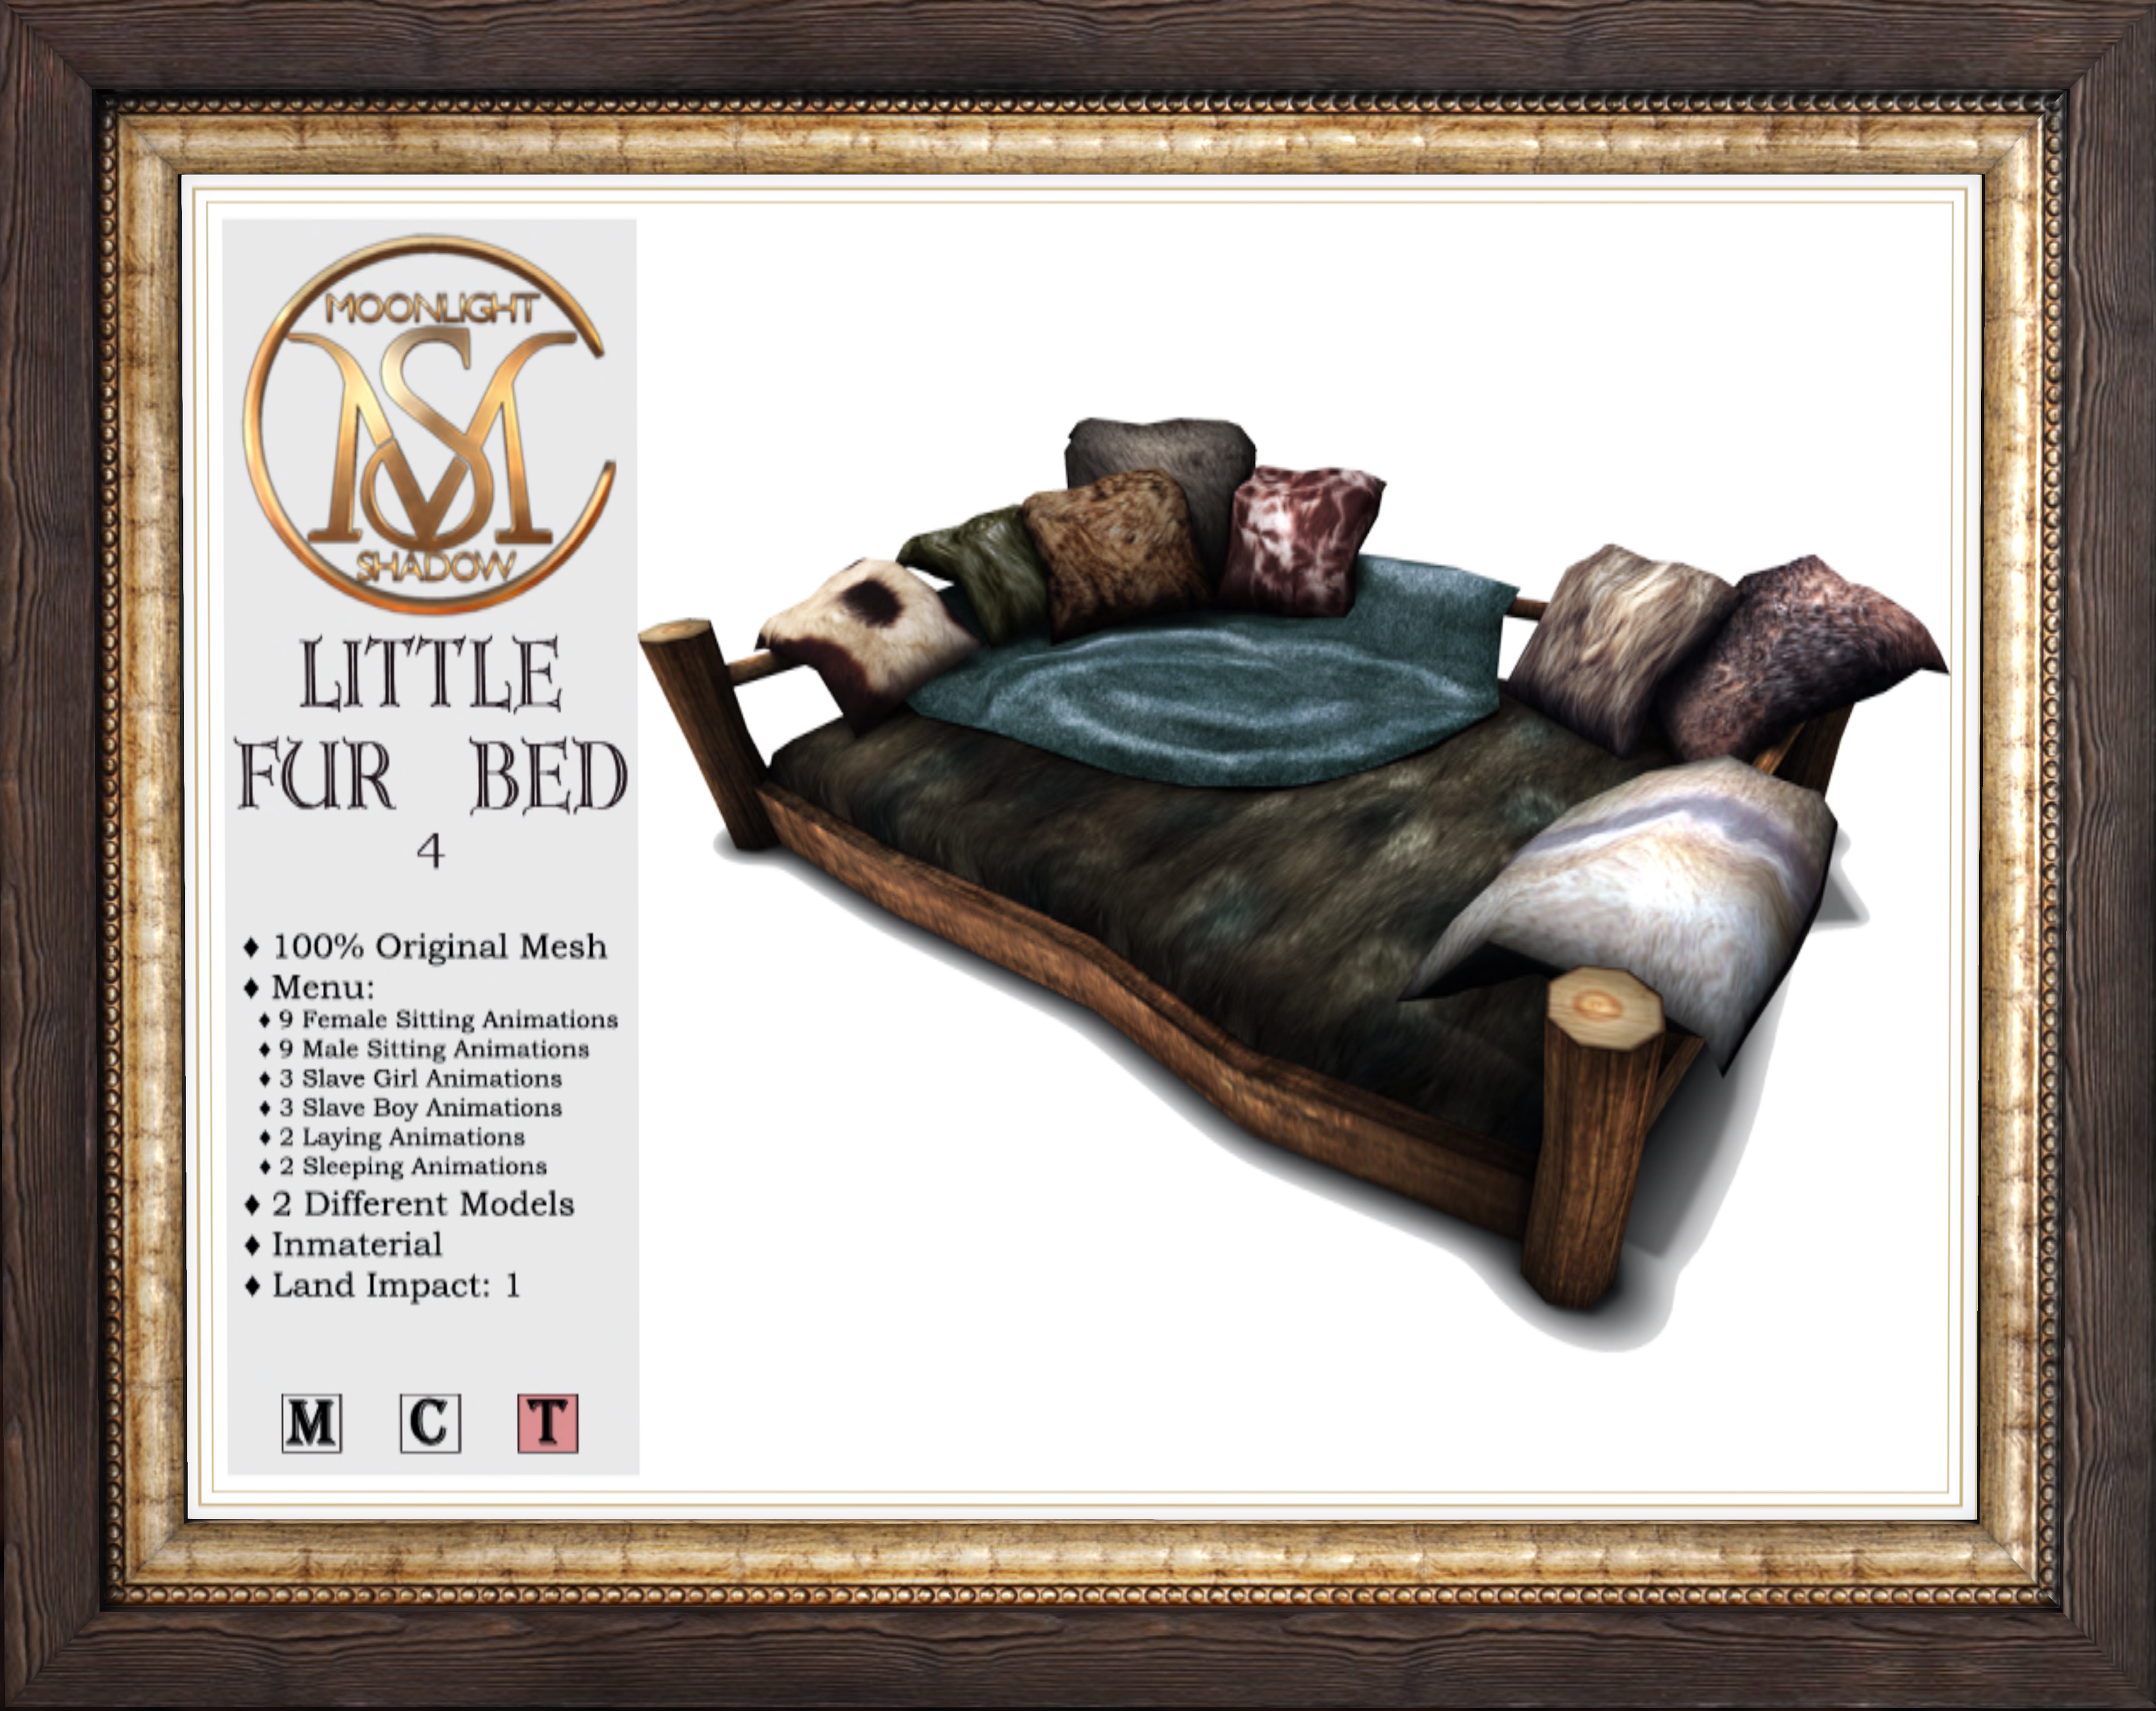 Moonlight Shadow – Little Fur Bed